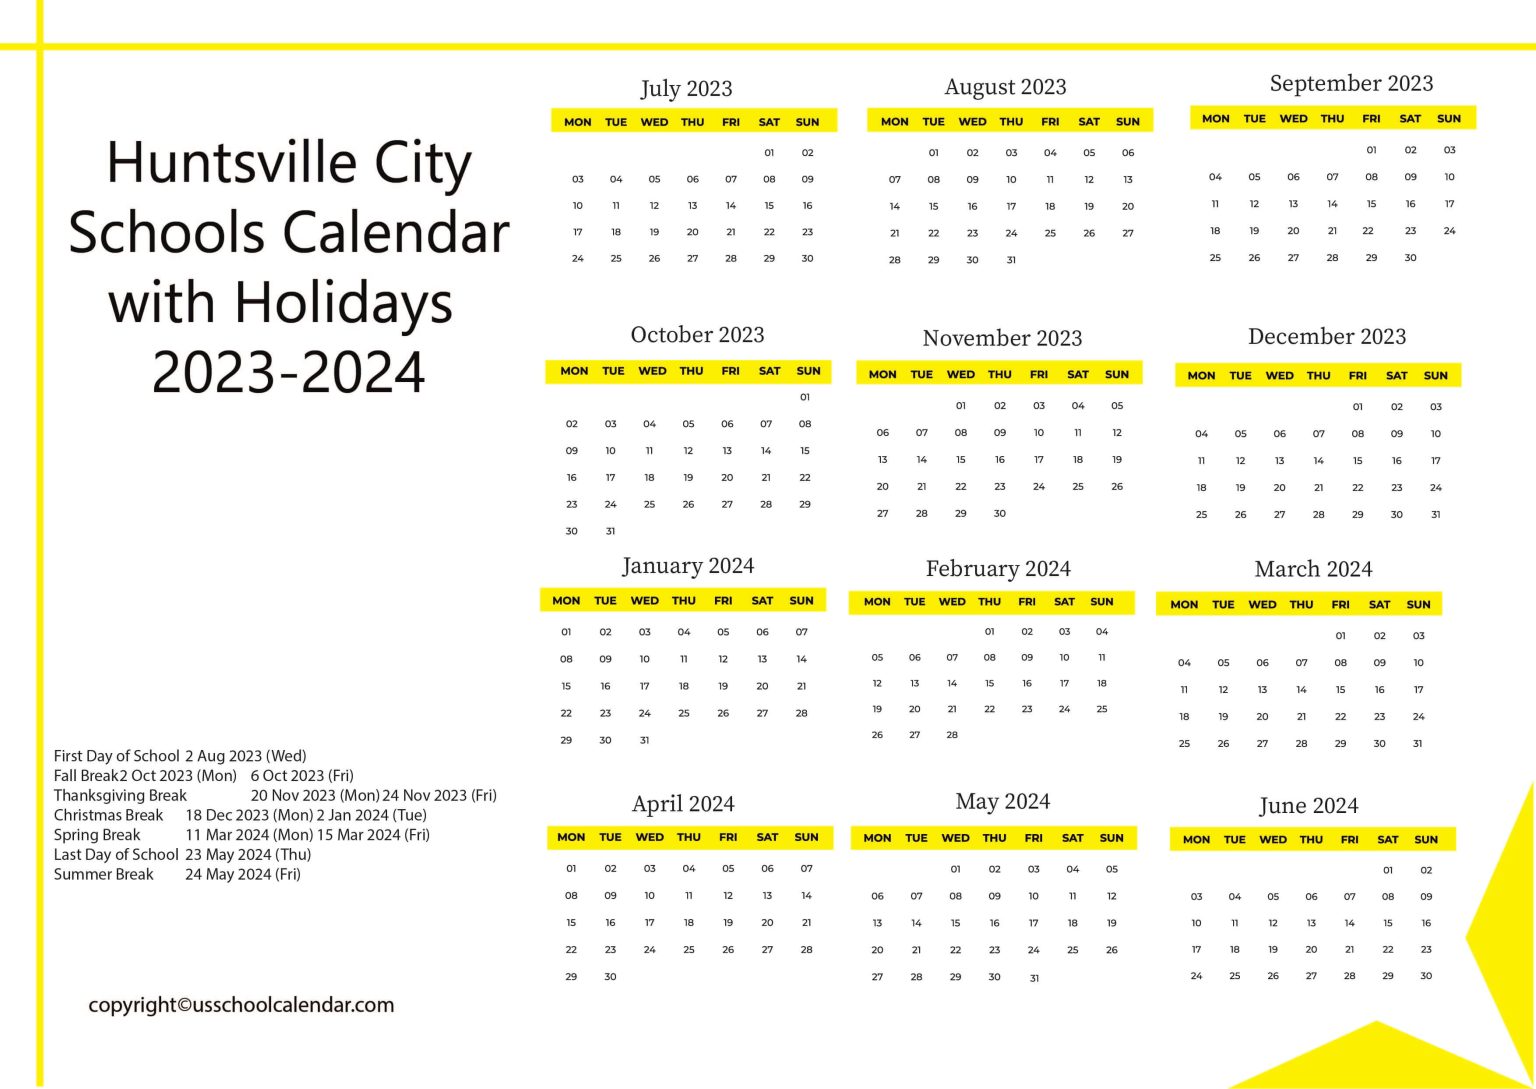 huntsville-city-schools-calendar-with-holidays-2023-2024